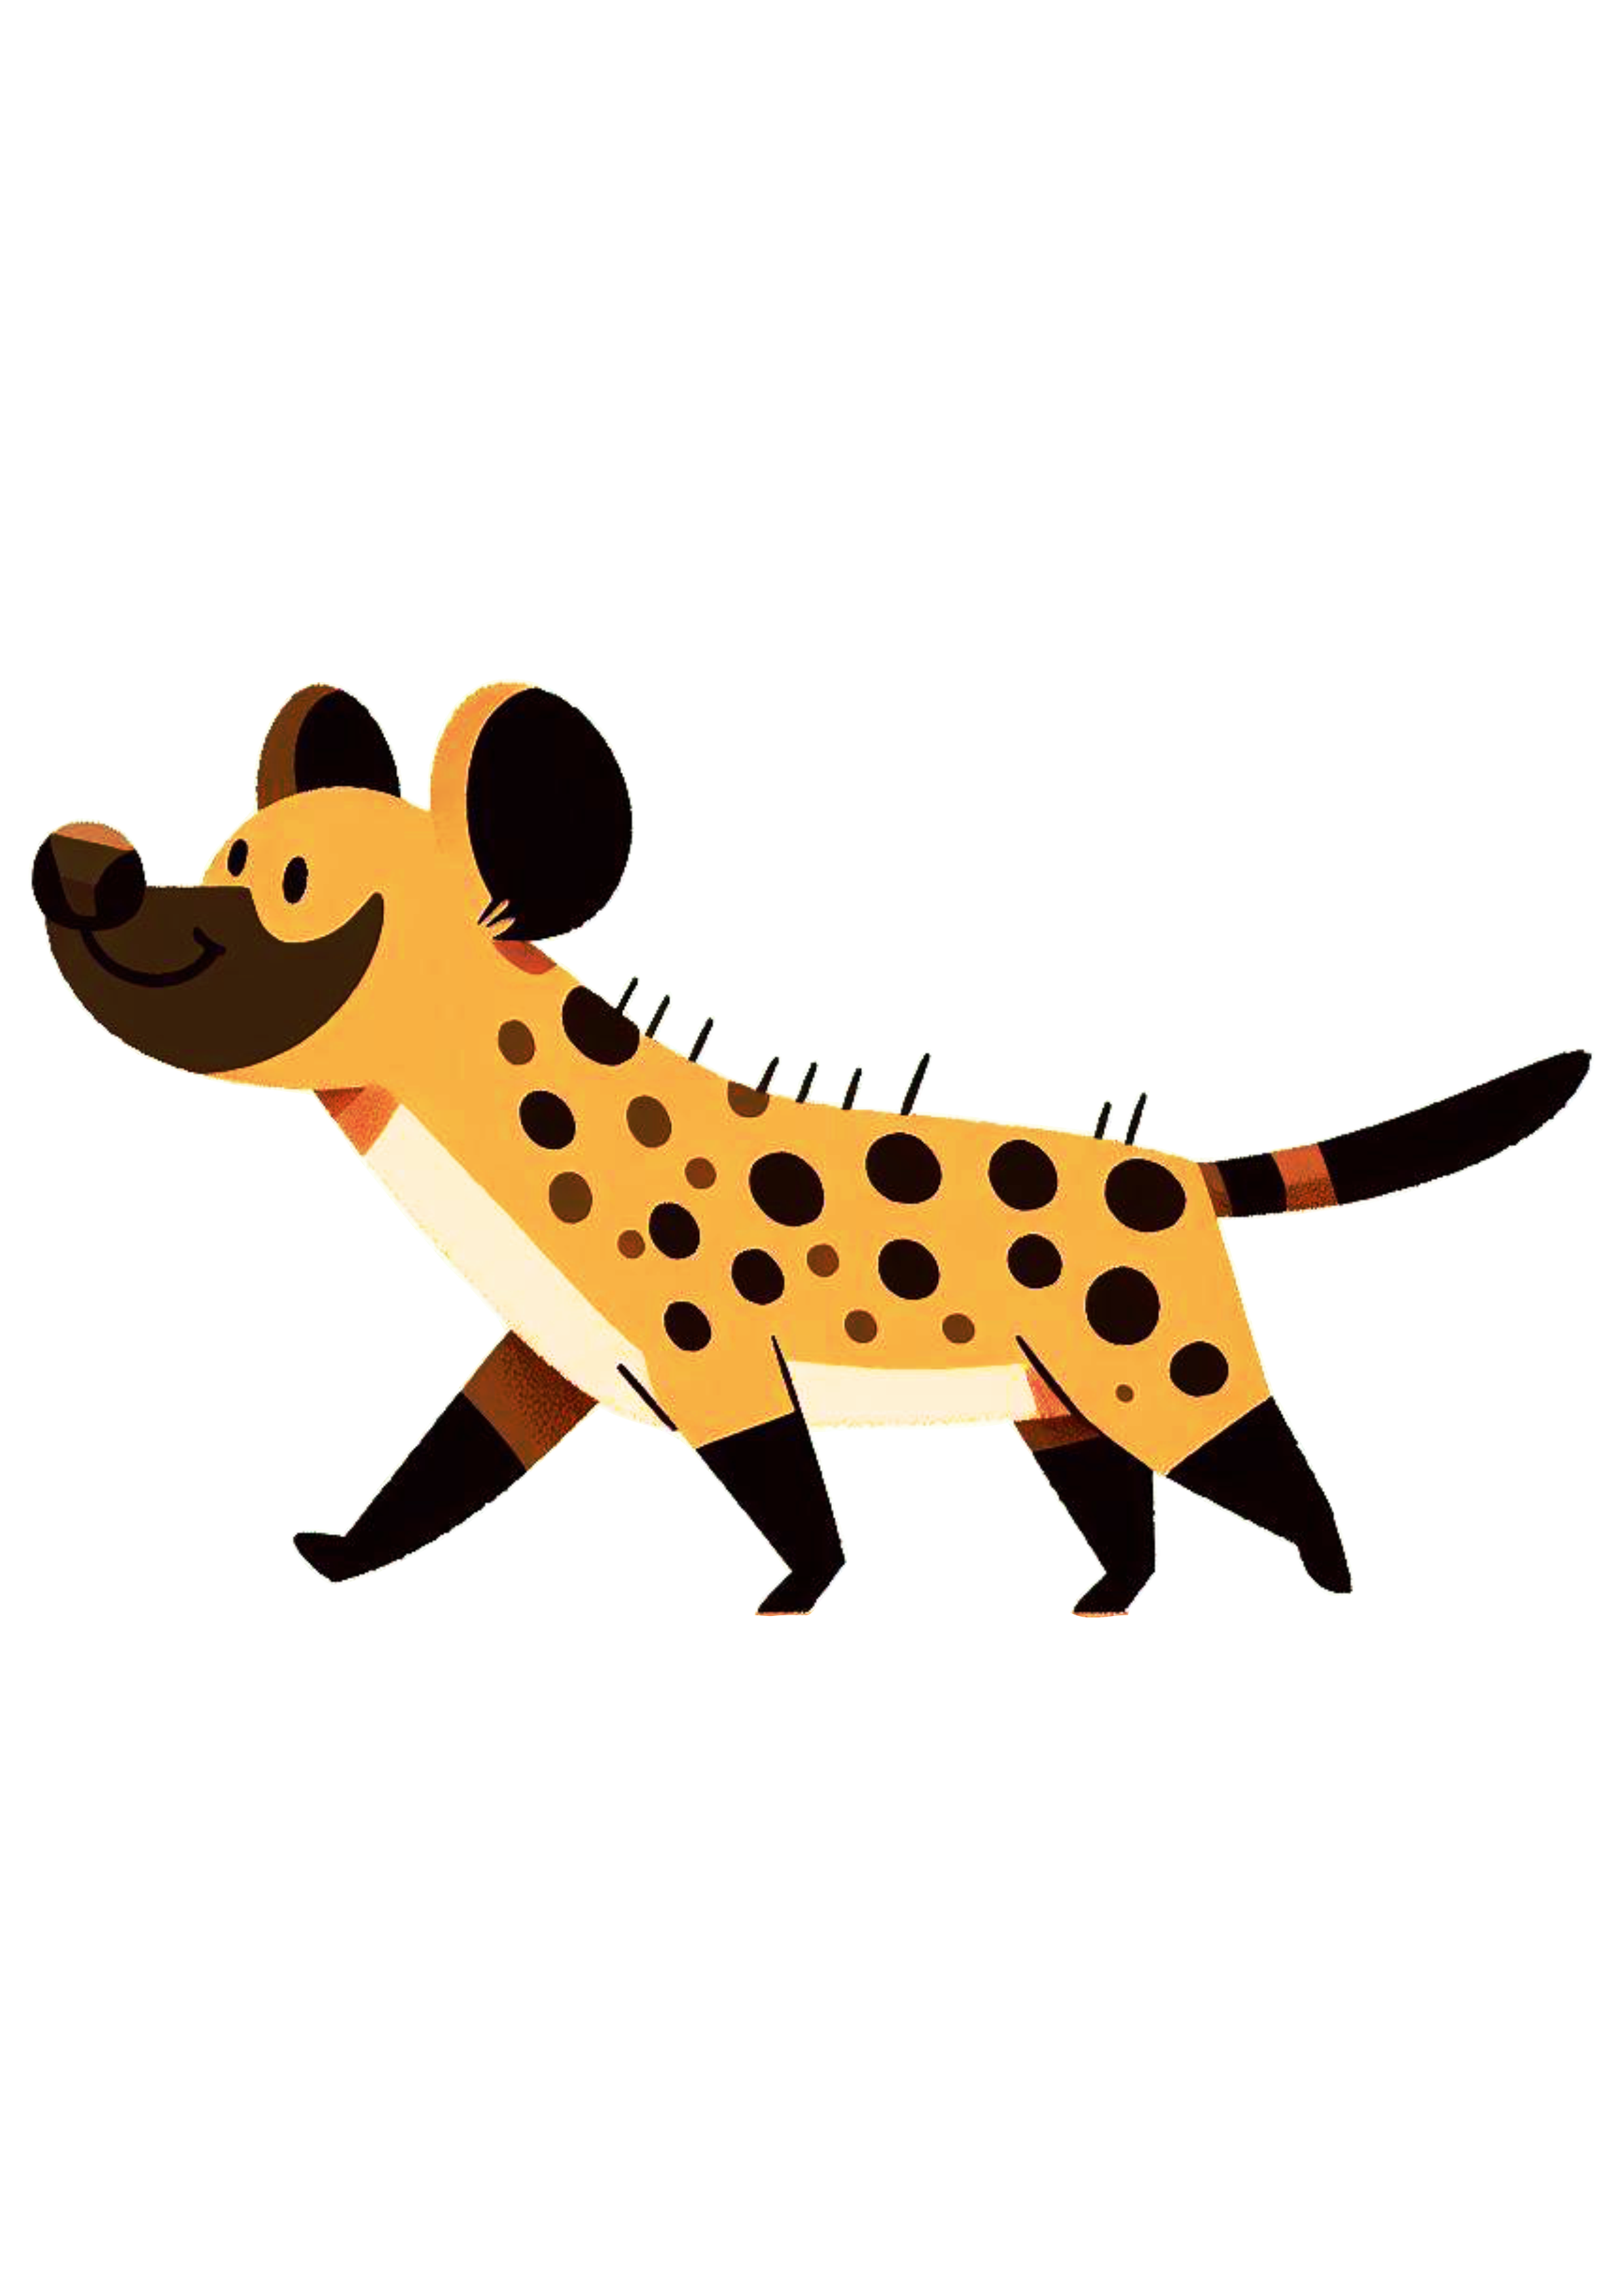 Hiena desenho simples safari de animais png